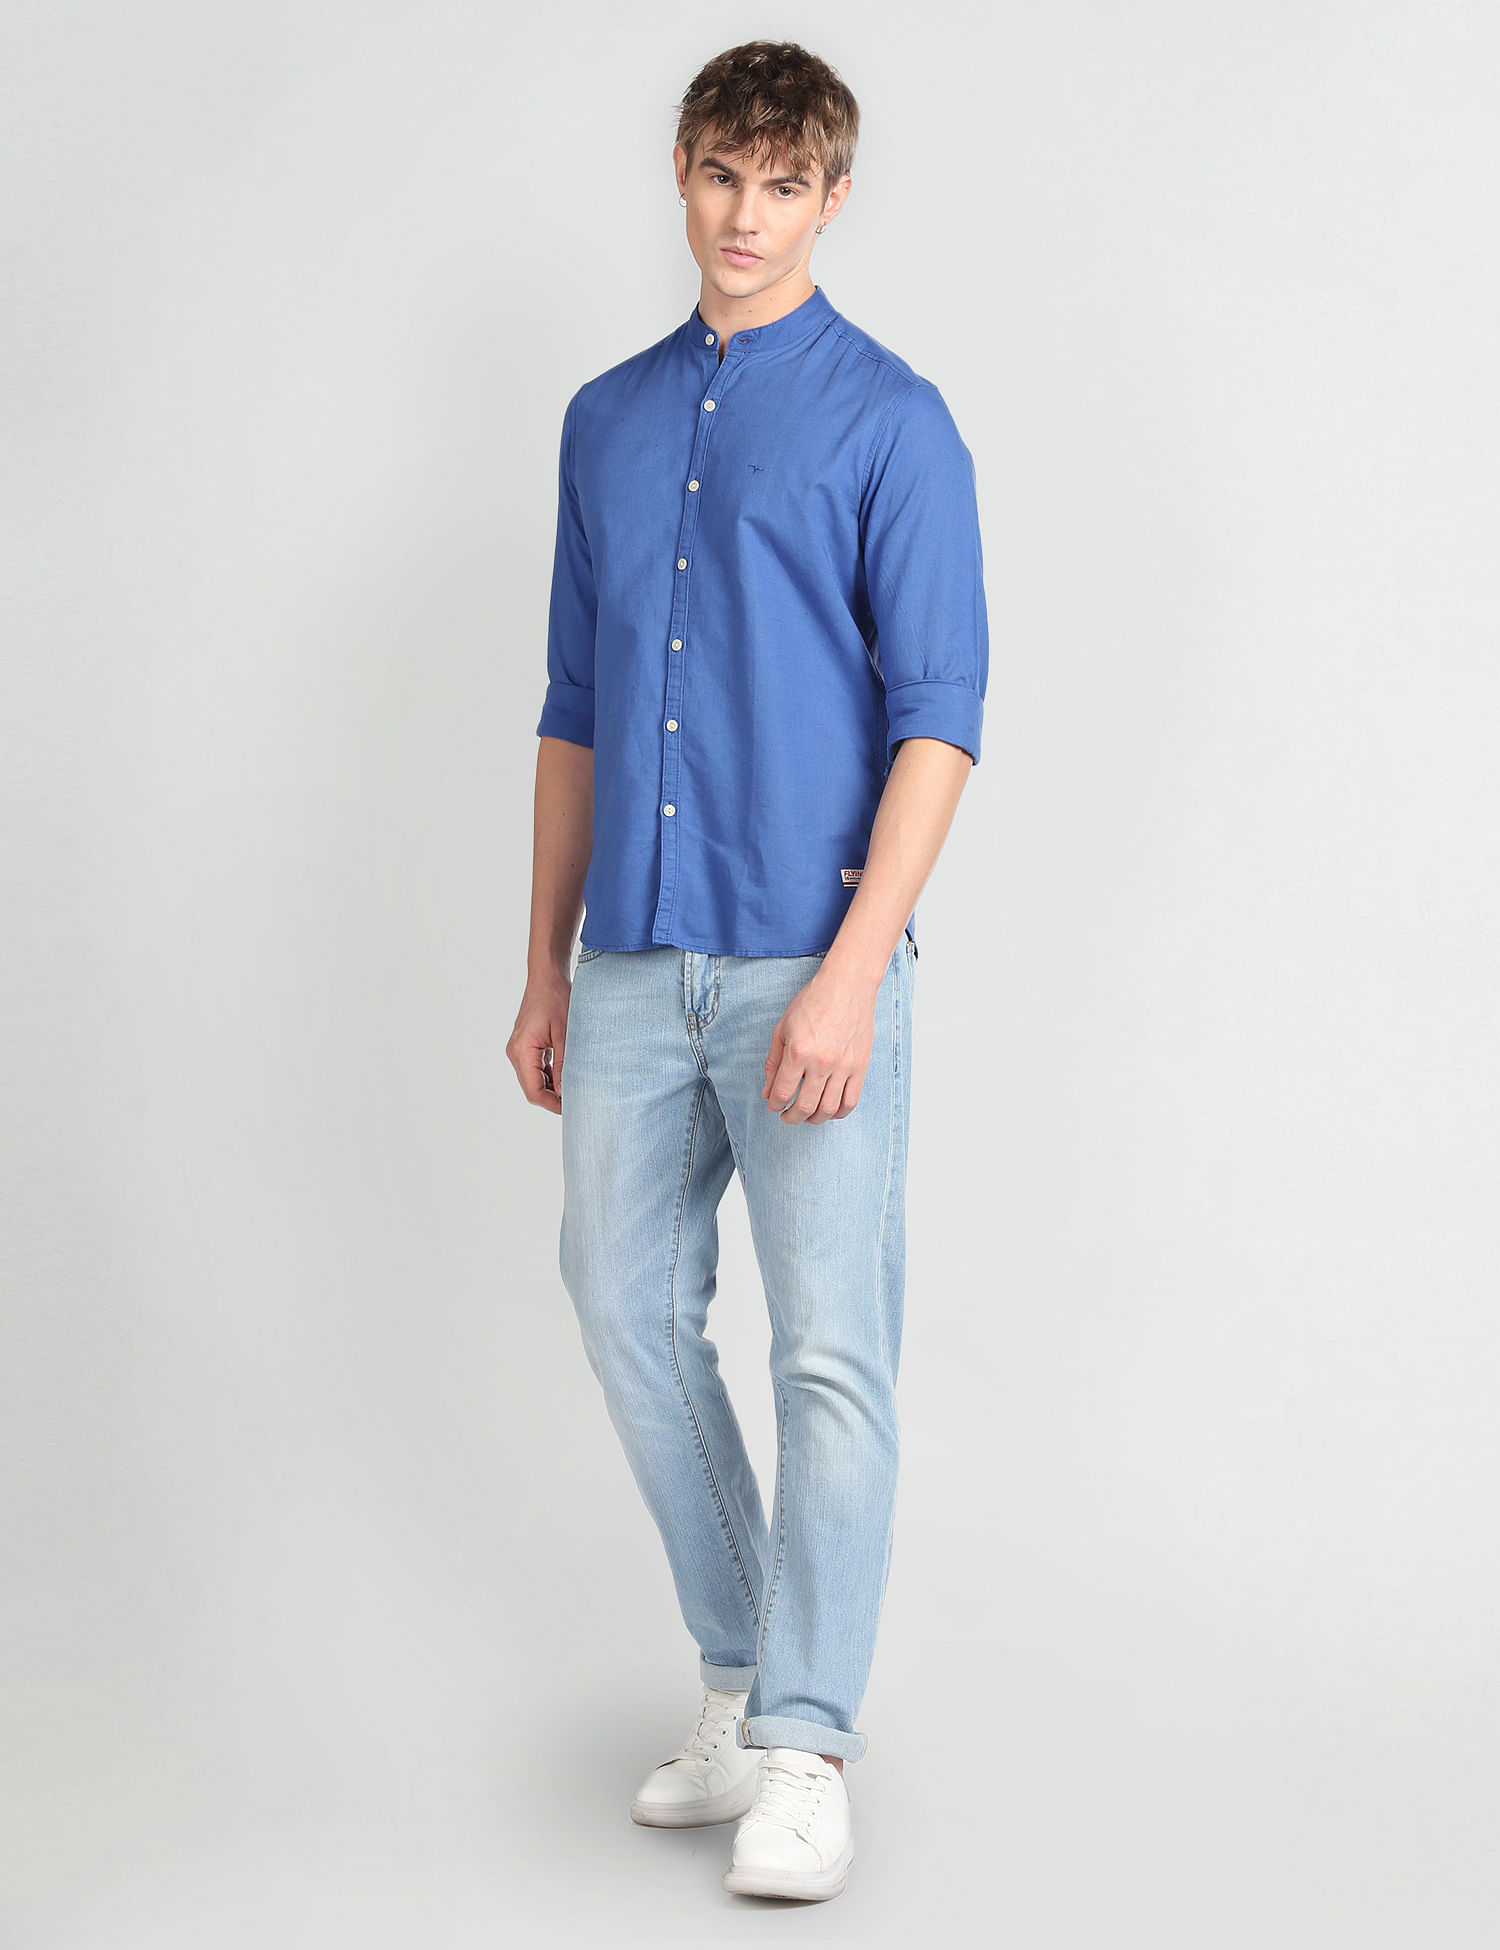 Men's Shirt New England Slim Plain 50% cotton 50% linen collar Mandarin  collar Long sleeve